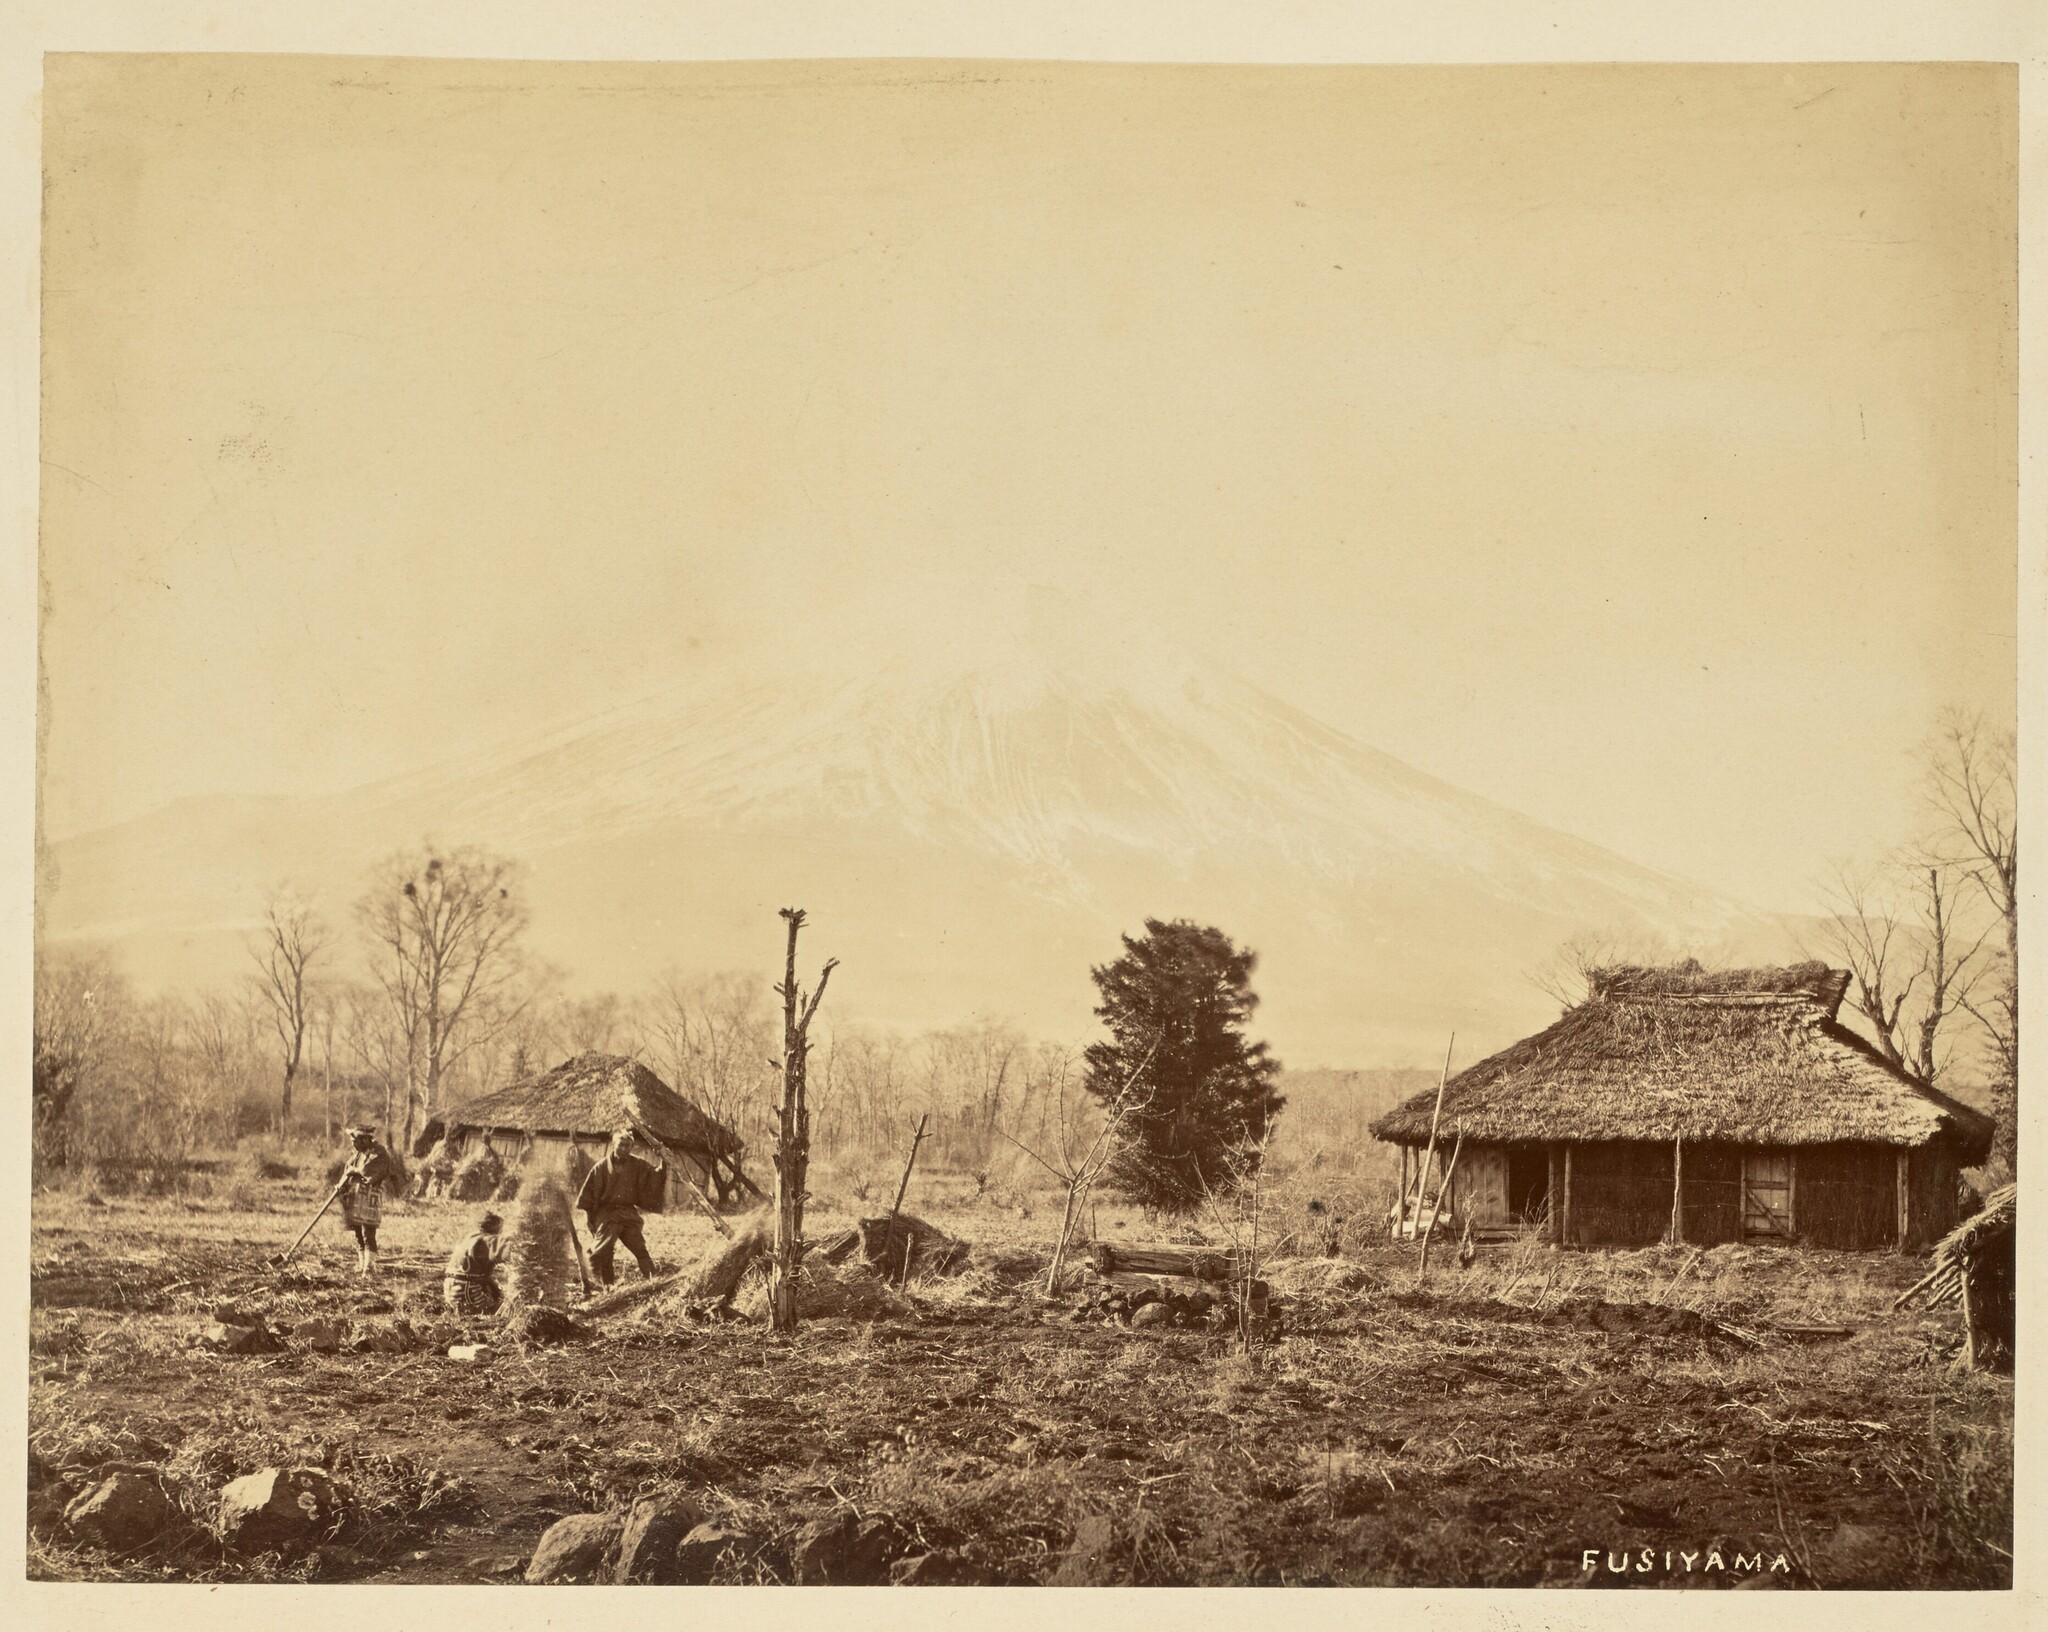 Japan 19th century. - Sciencepro, Story, Japan, 19th century, Informative, Black and white photo, Old photo, Osaka, Interesting, Longpost